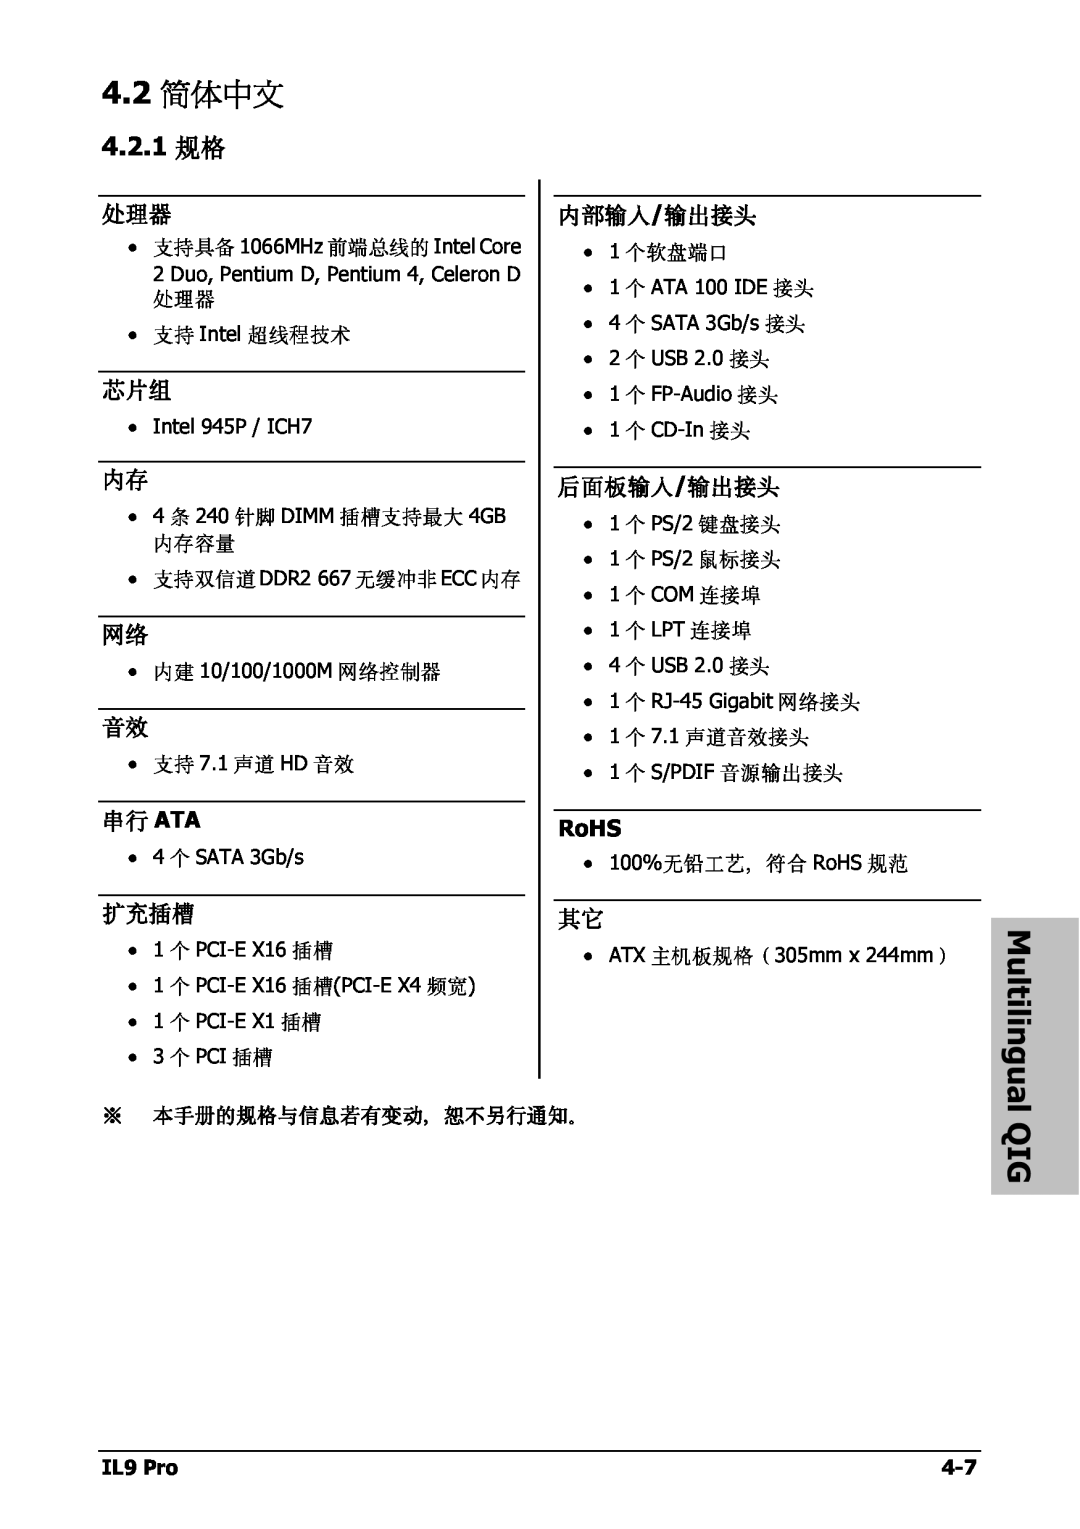 Nextar IL9 PRO appendix 4.2 简体中文, Multilingual, 4.2.1 规格, 串行 Ata, 扩充插槽, 内部输入/输出接头, 后面板输入/输出接头 